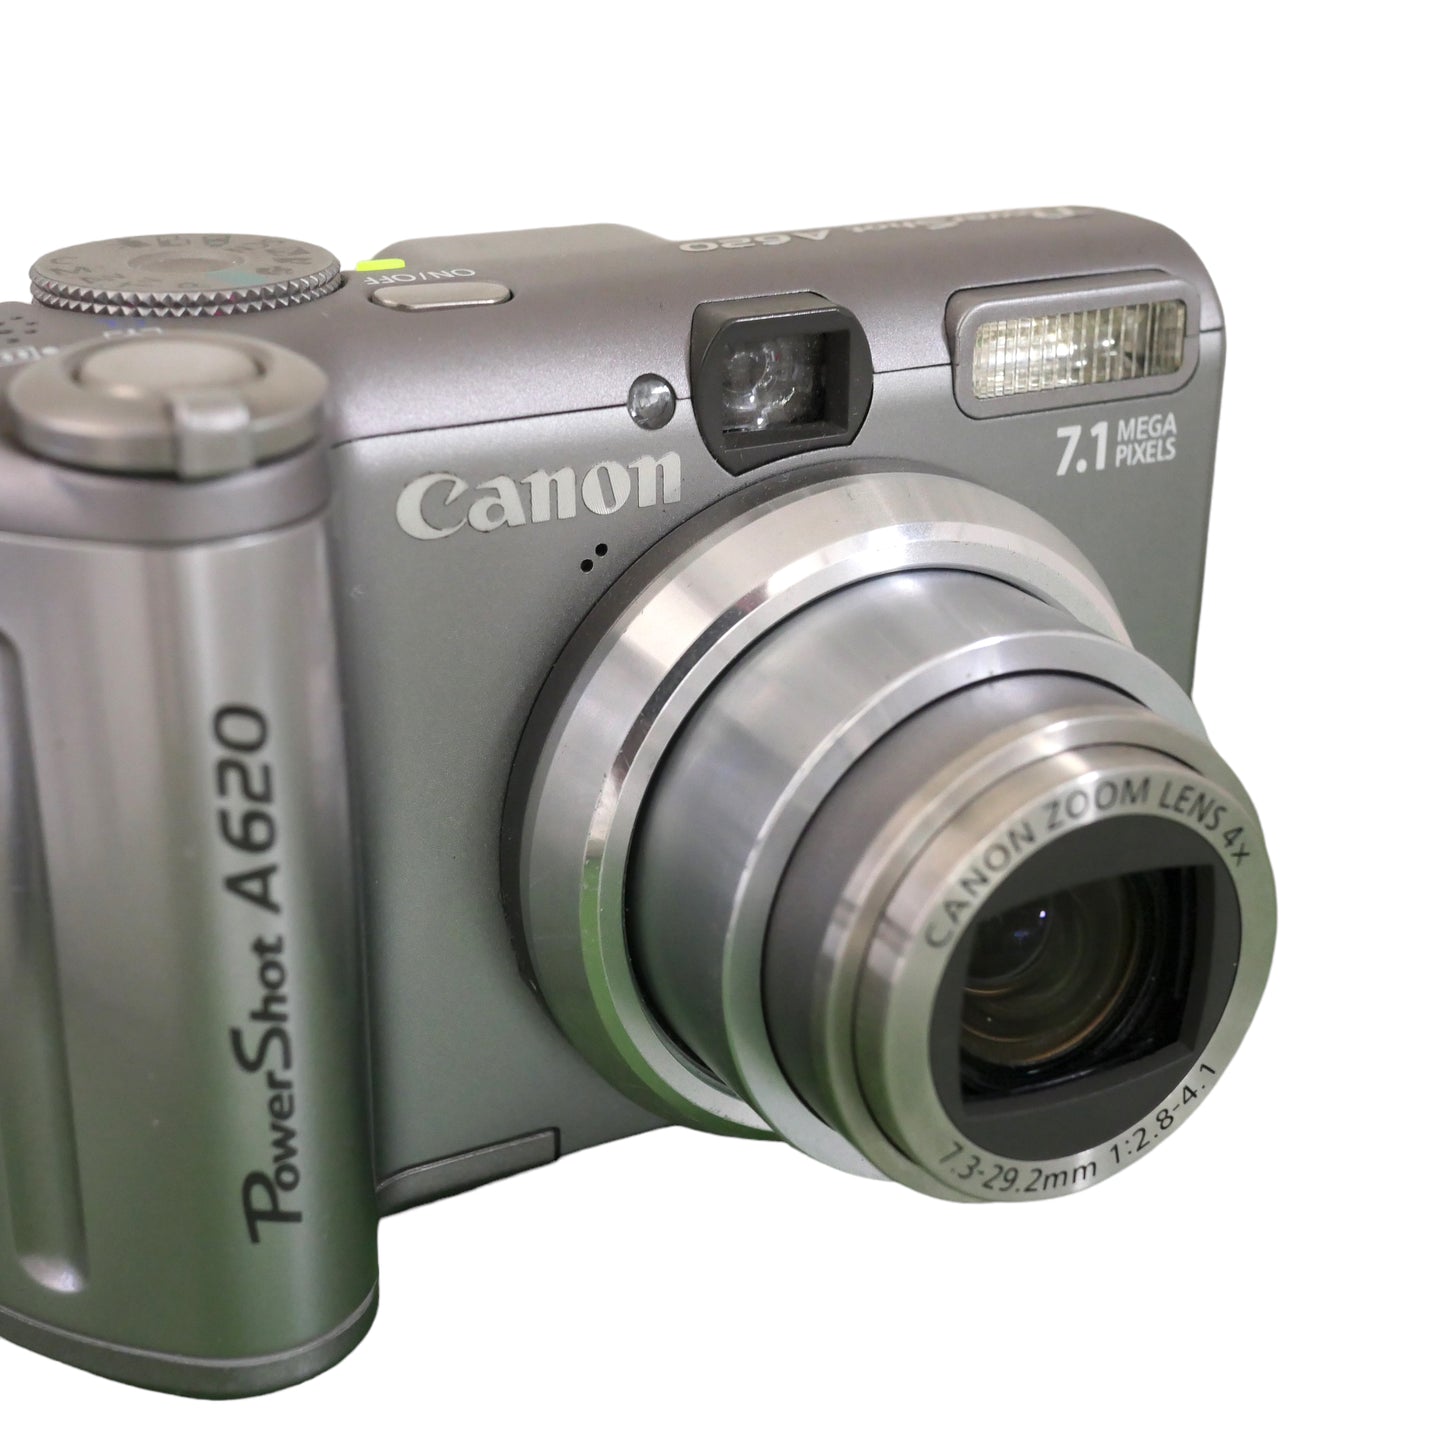 Canon Powershot A620 - 7.1 Megapixel Digital Camera